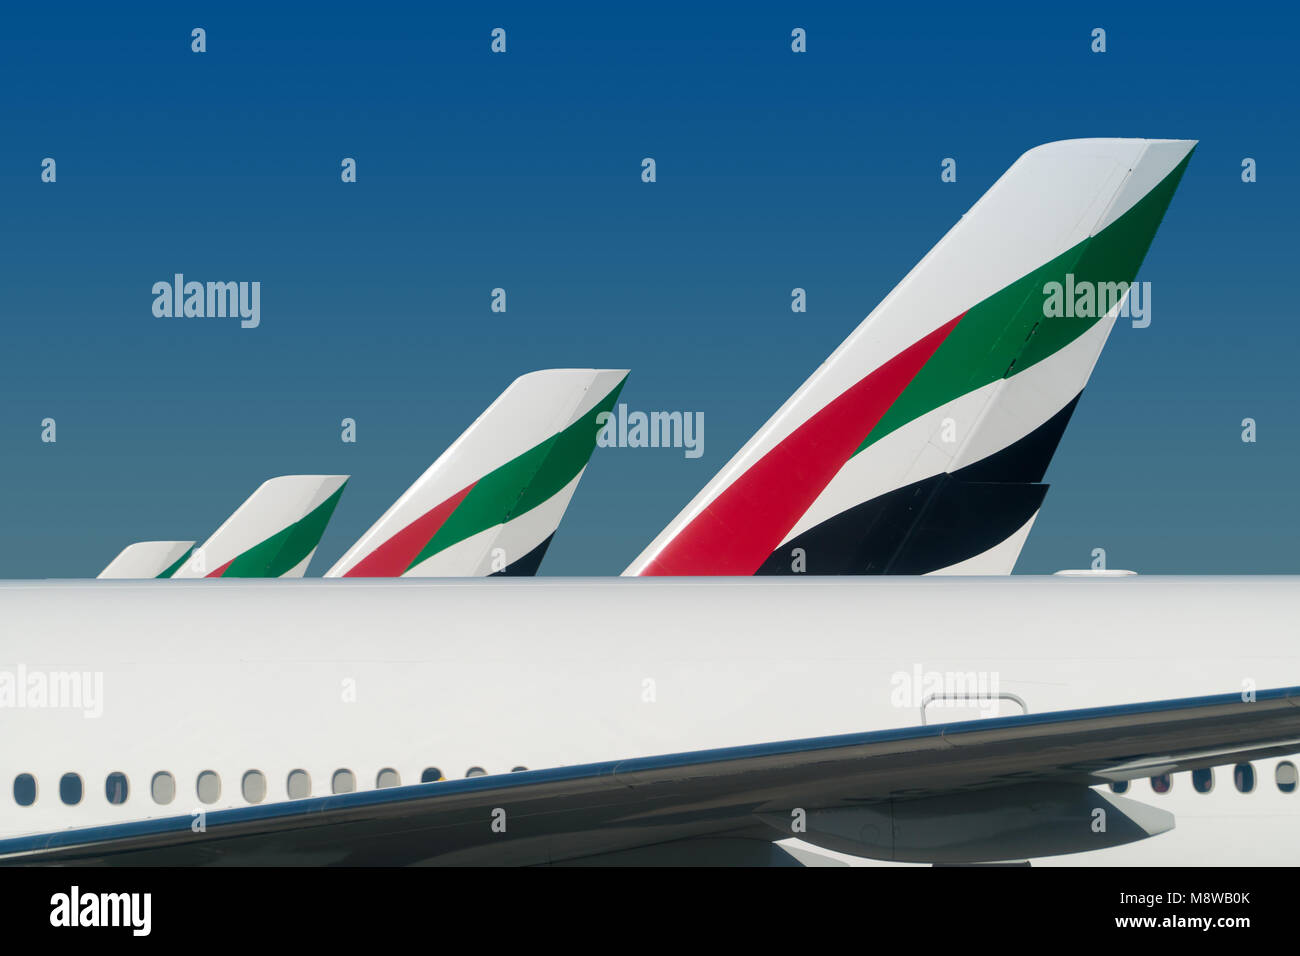 DUBAI - DECEMBER 12, 2017: Emirates airplane planes docked at Dubai International Airport on december 12, 2017 in Dubai, UAE. Stock Photo